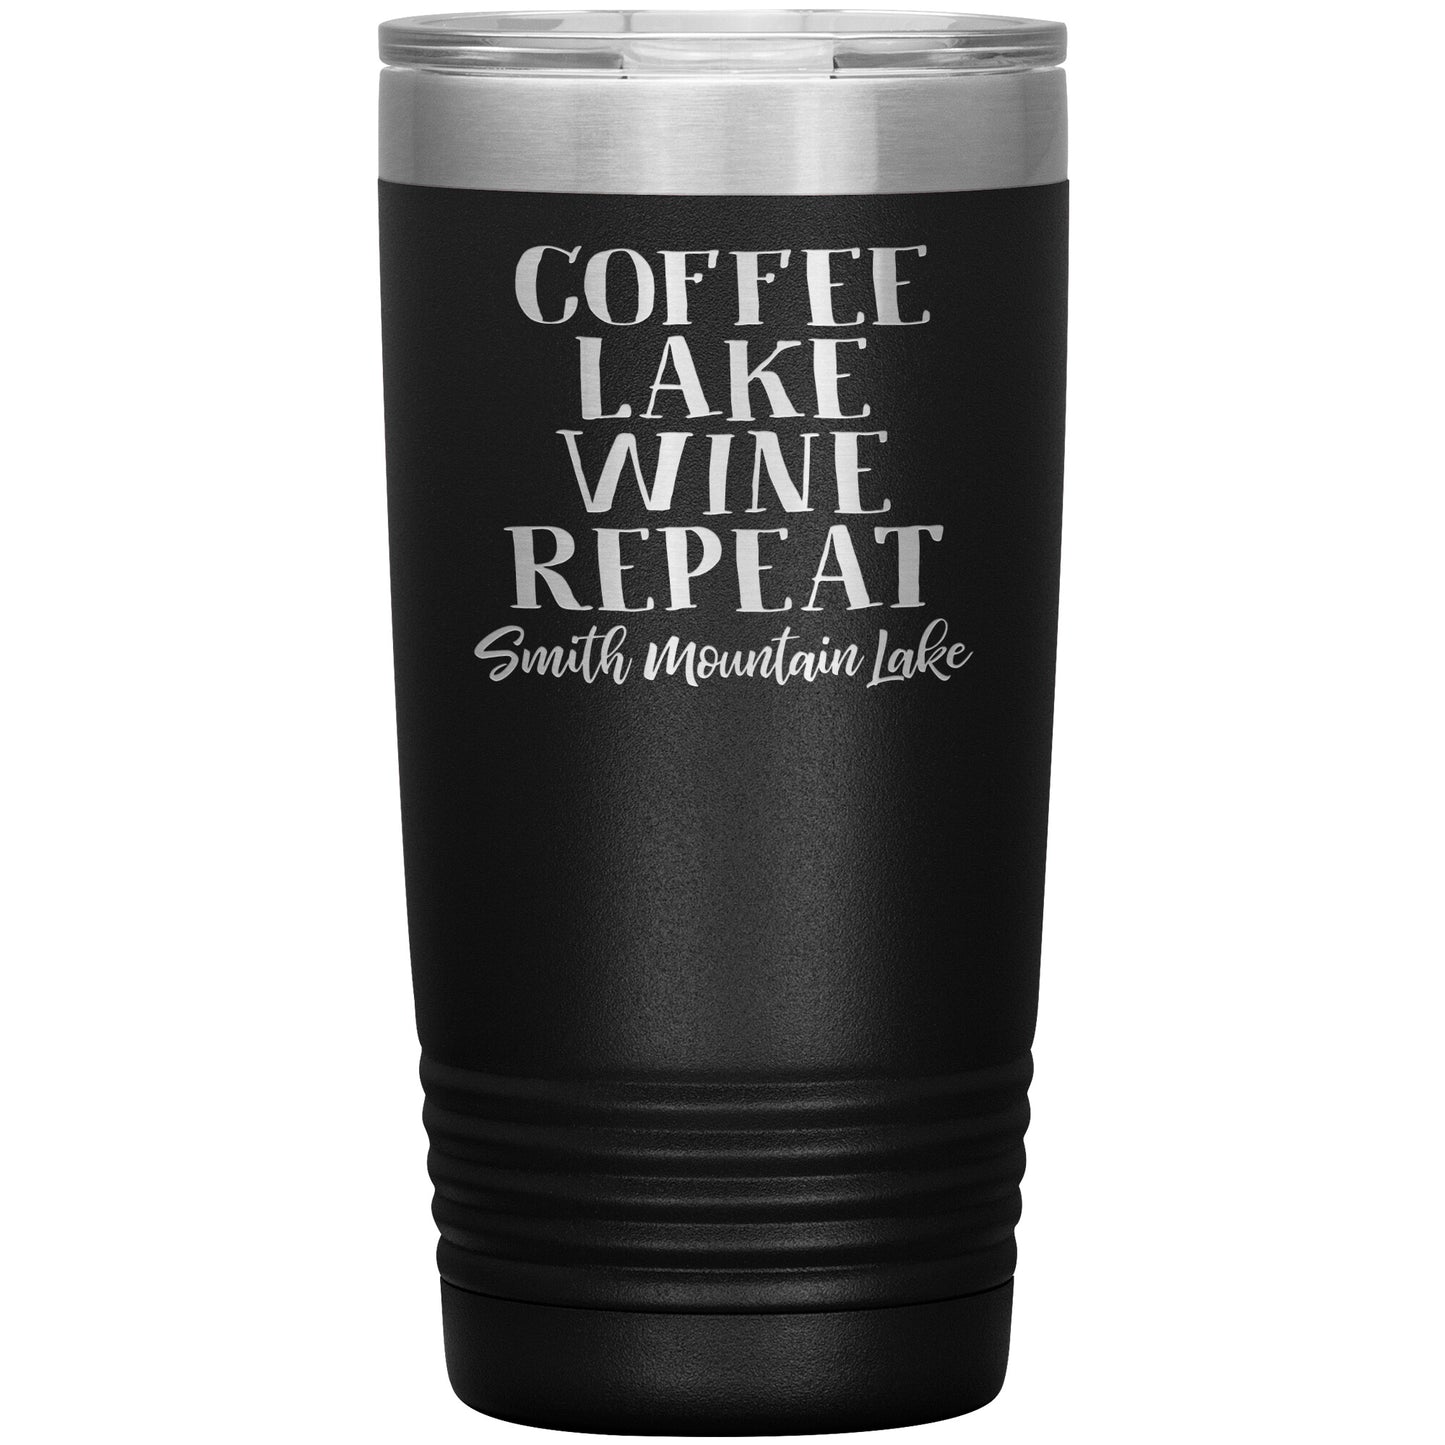 Coffee Lake Wine Repeat - Funny Smith Mountain Lake Drink Tumbler